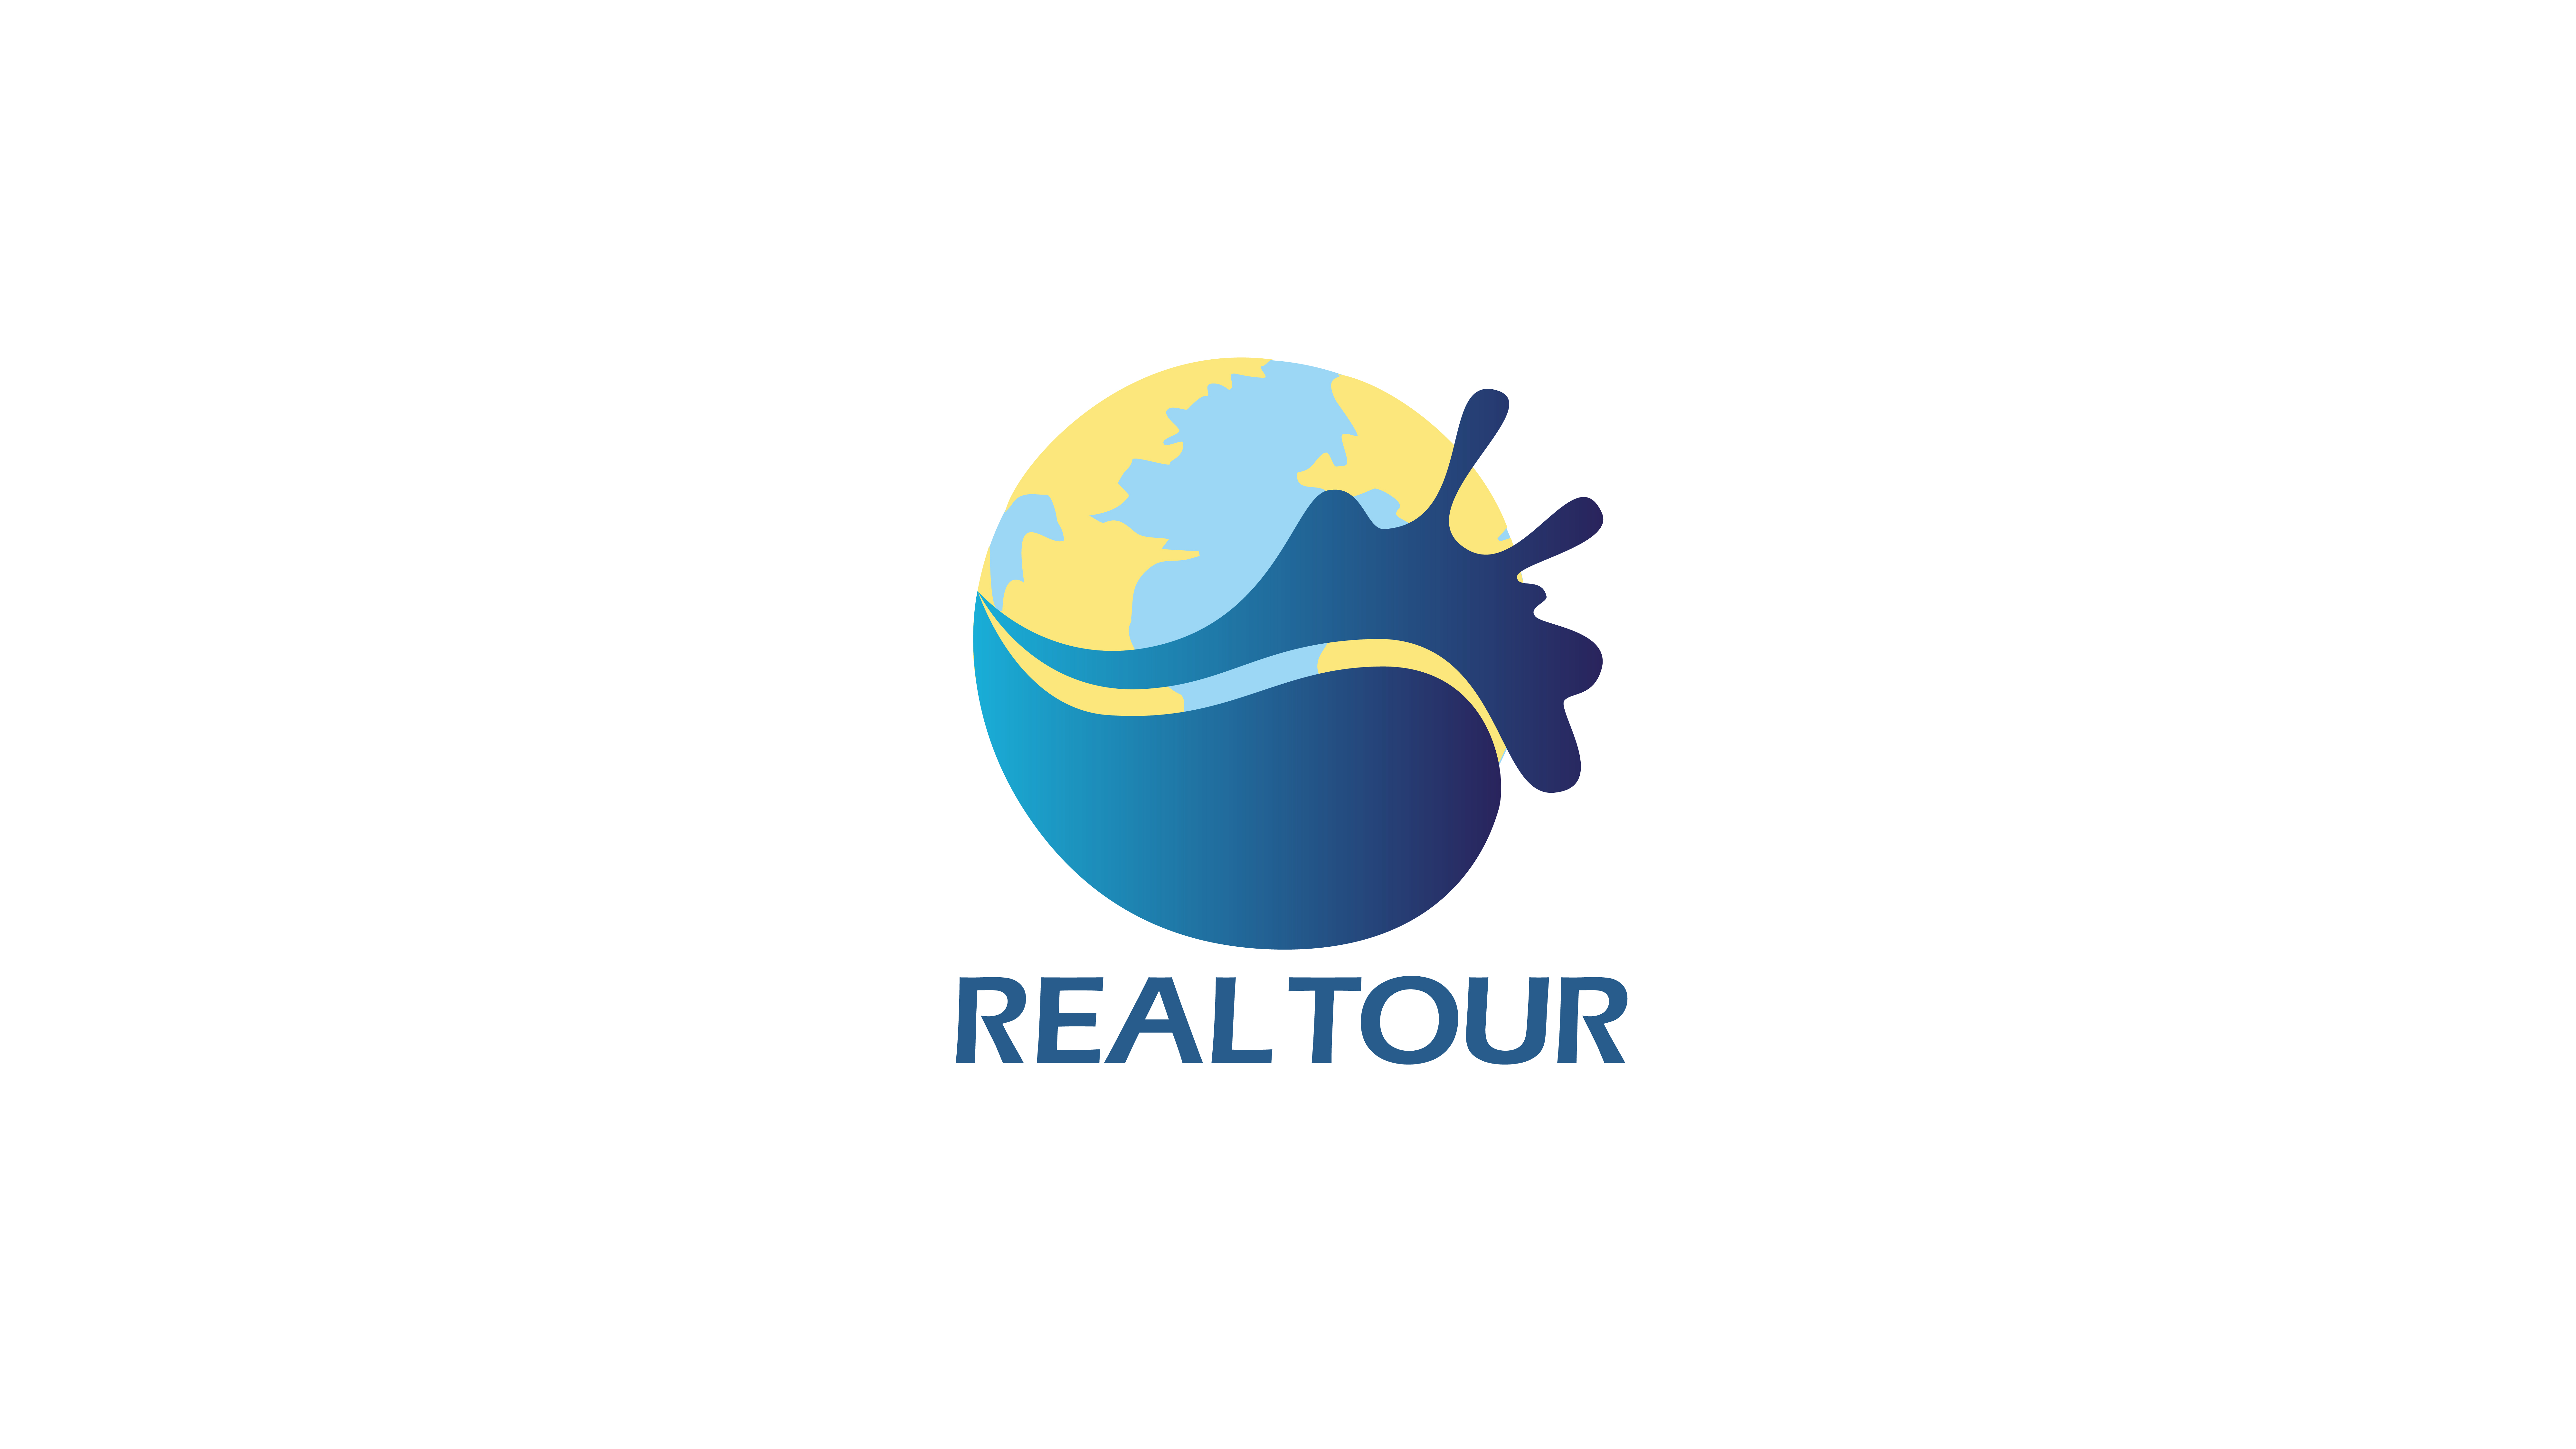     "Real tour"